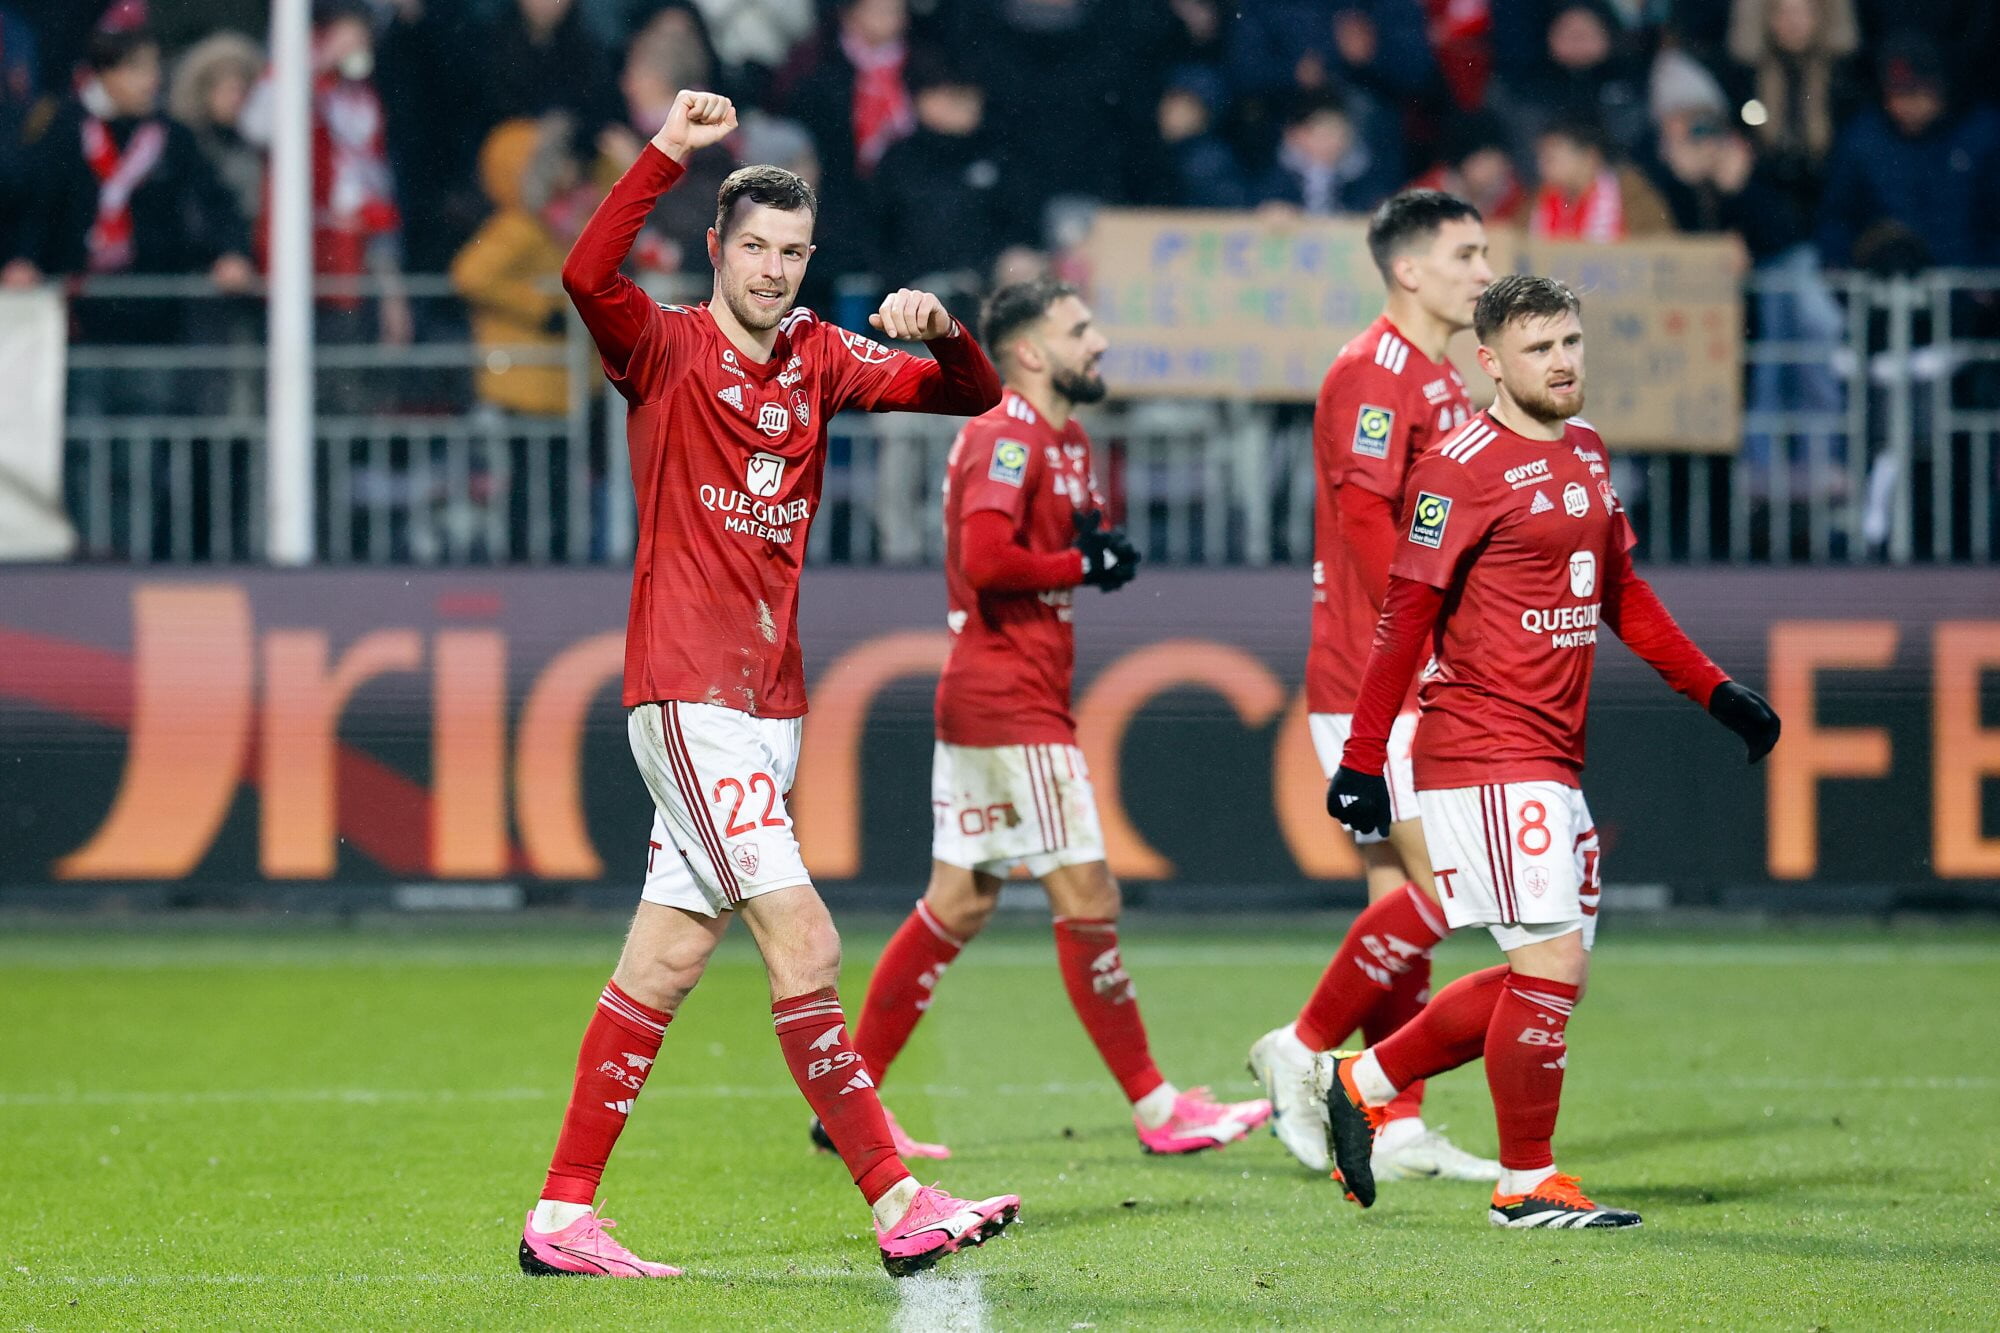 Stade Brestois' Jérémy Le Douaron celebrates